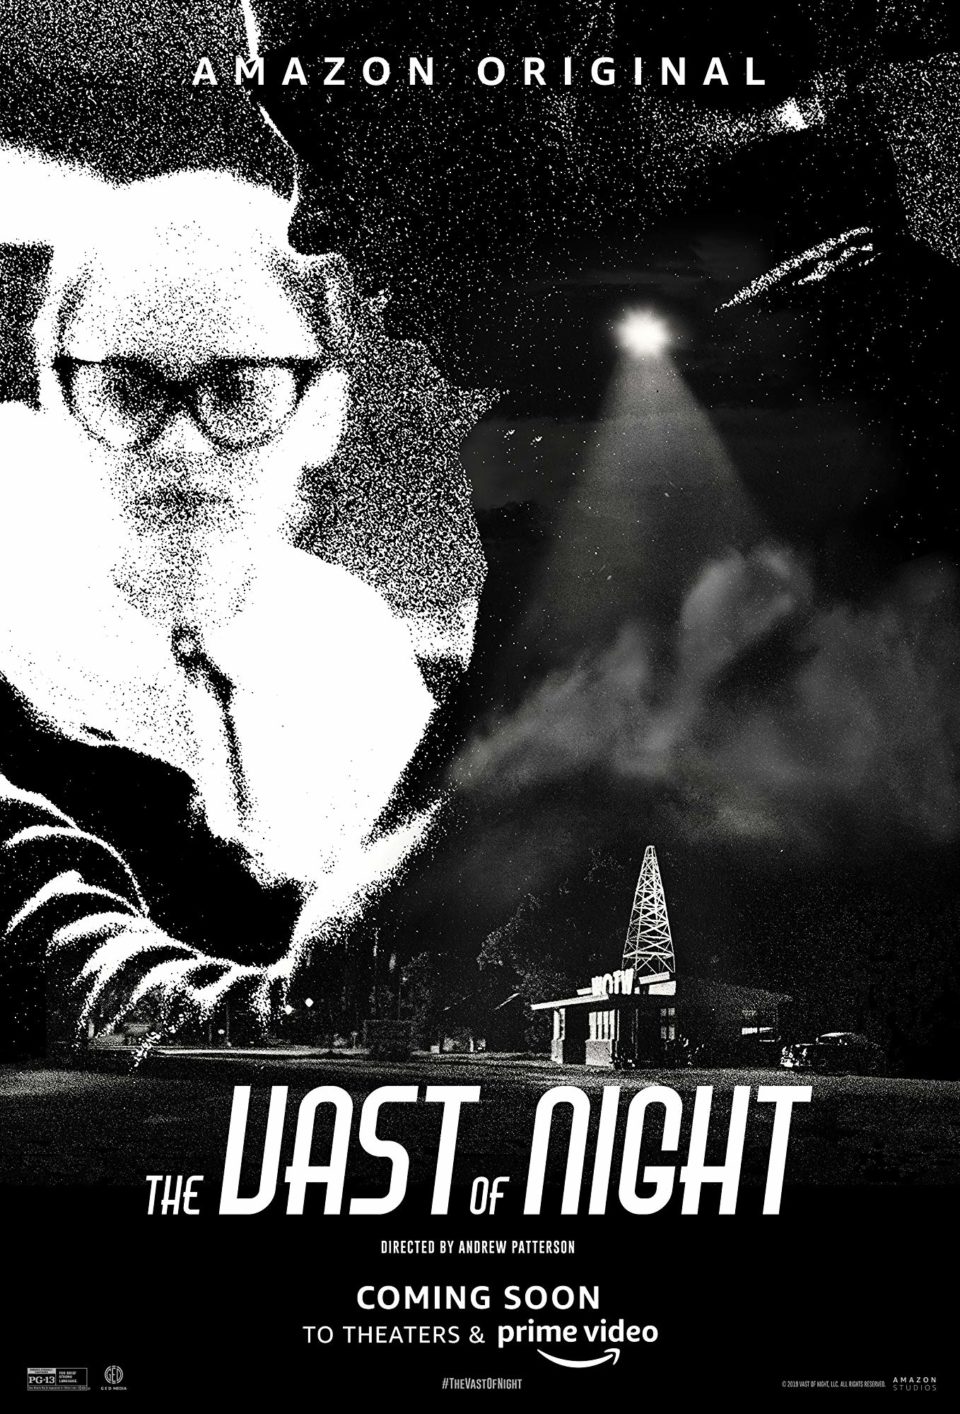 The Vast of Night – Teaser Poster